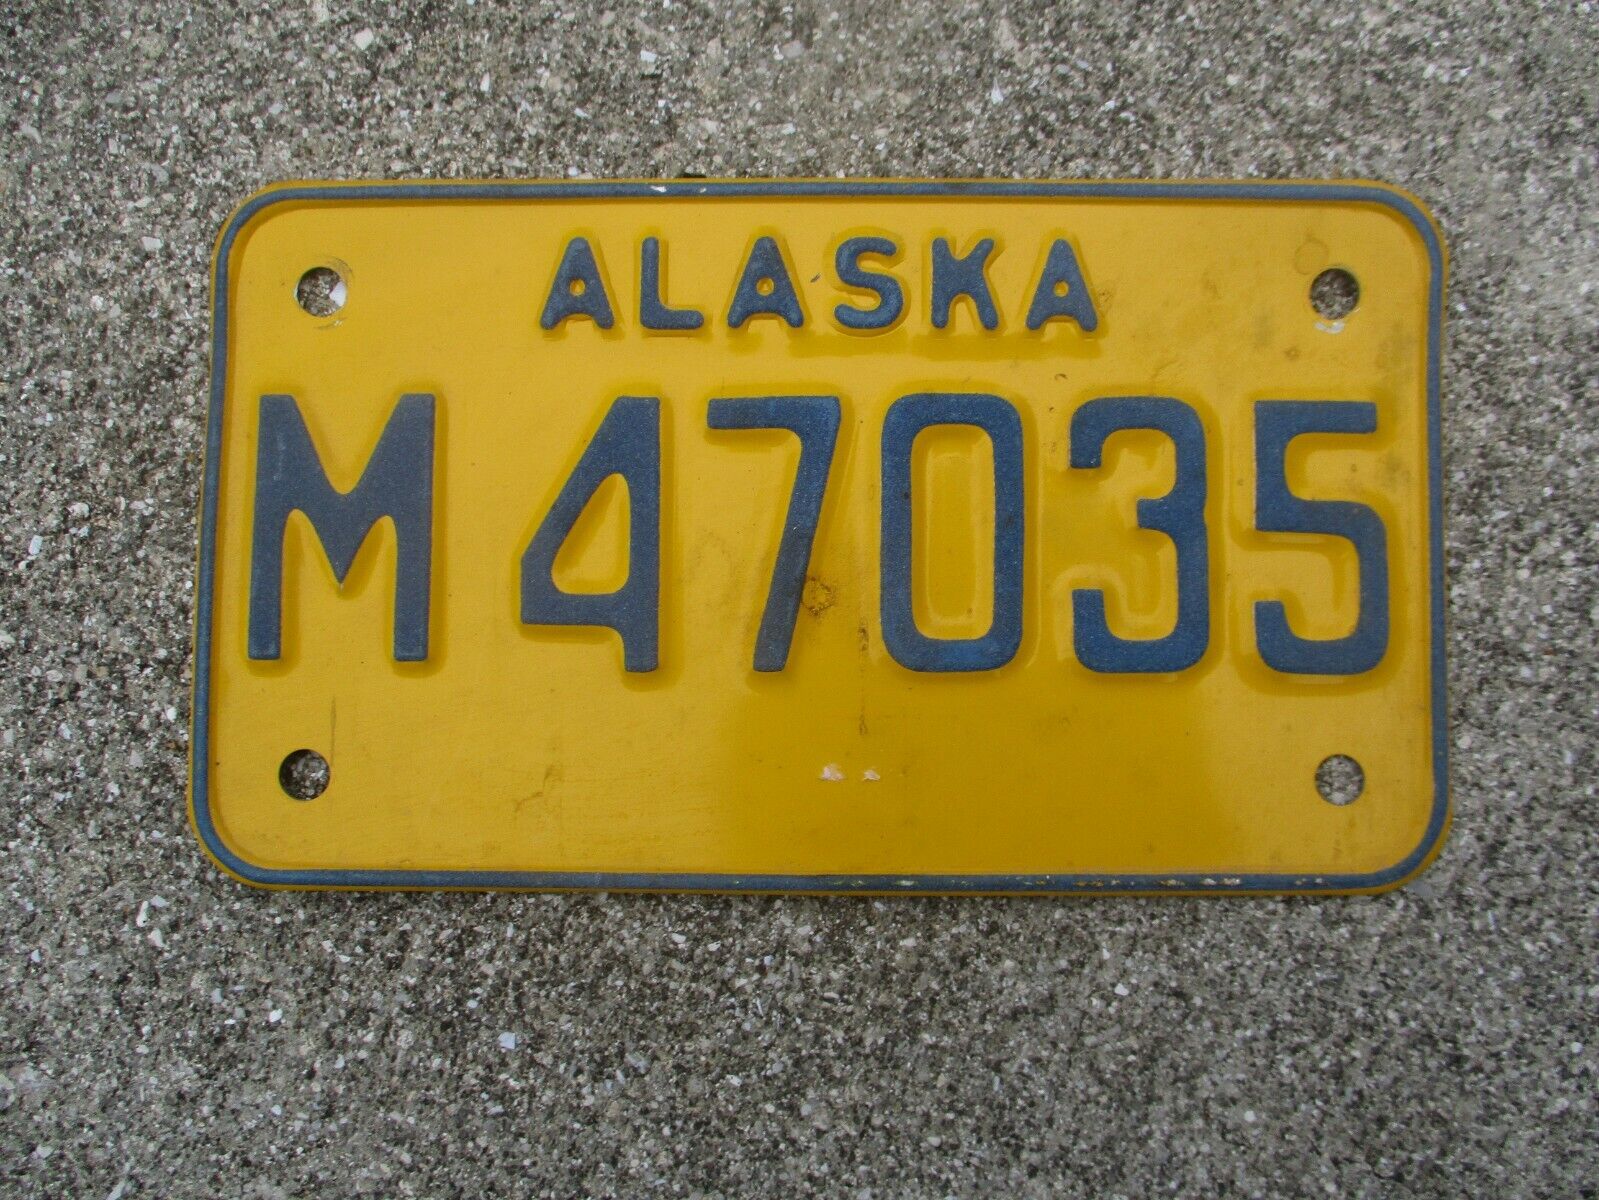 Alaska Motorcycle License Plate #   M 47035